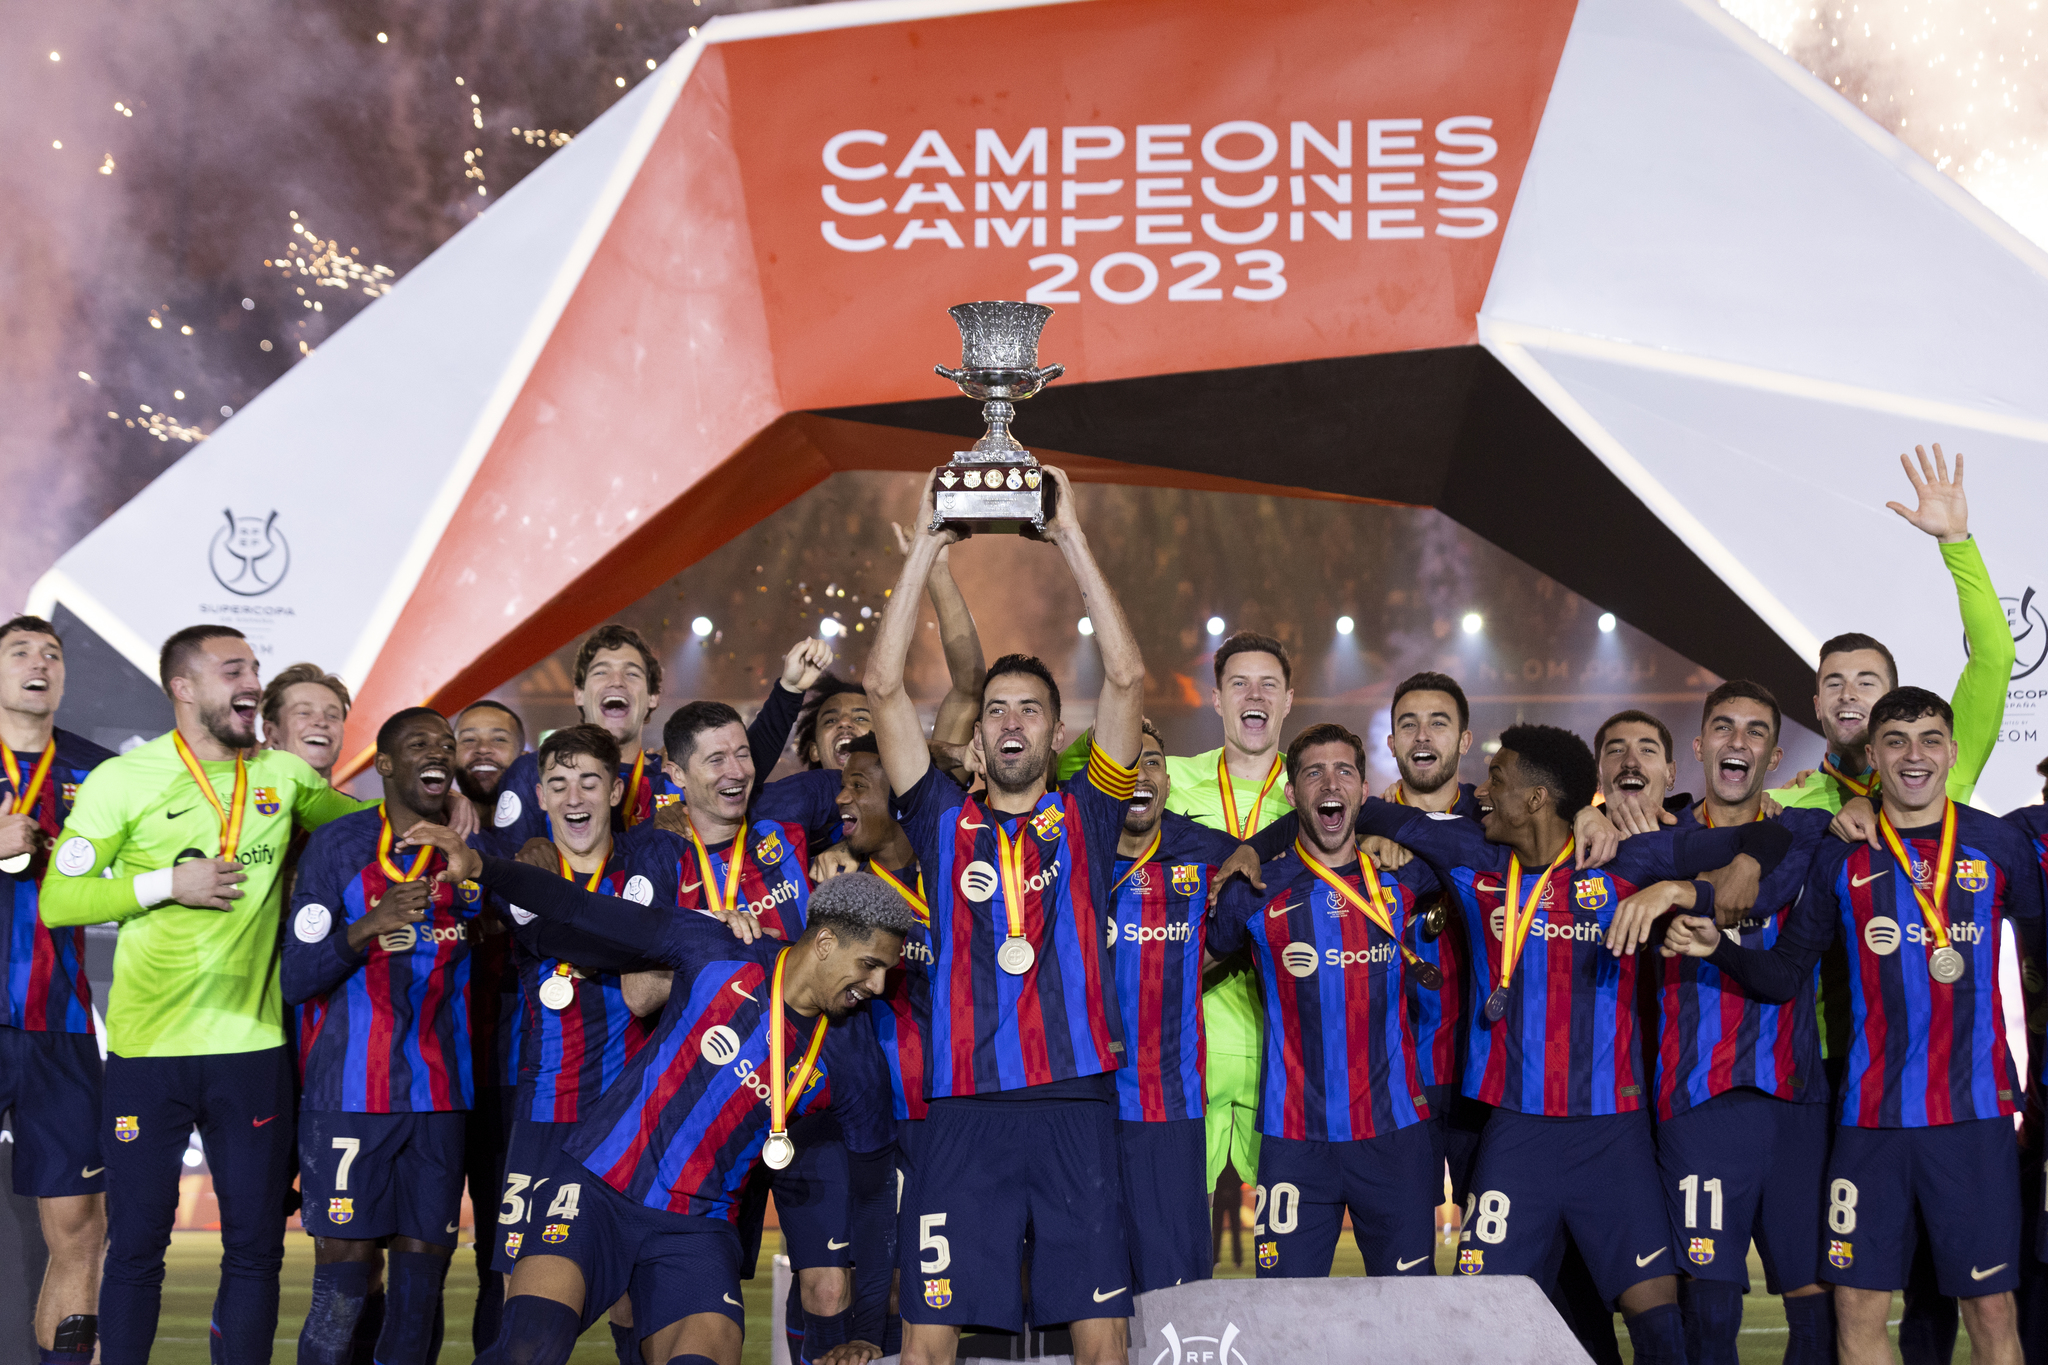 Supercopa de Espana winners - Barcelona